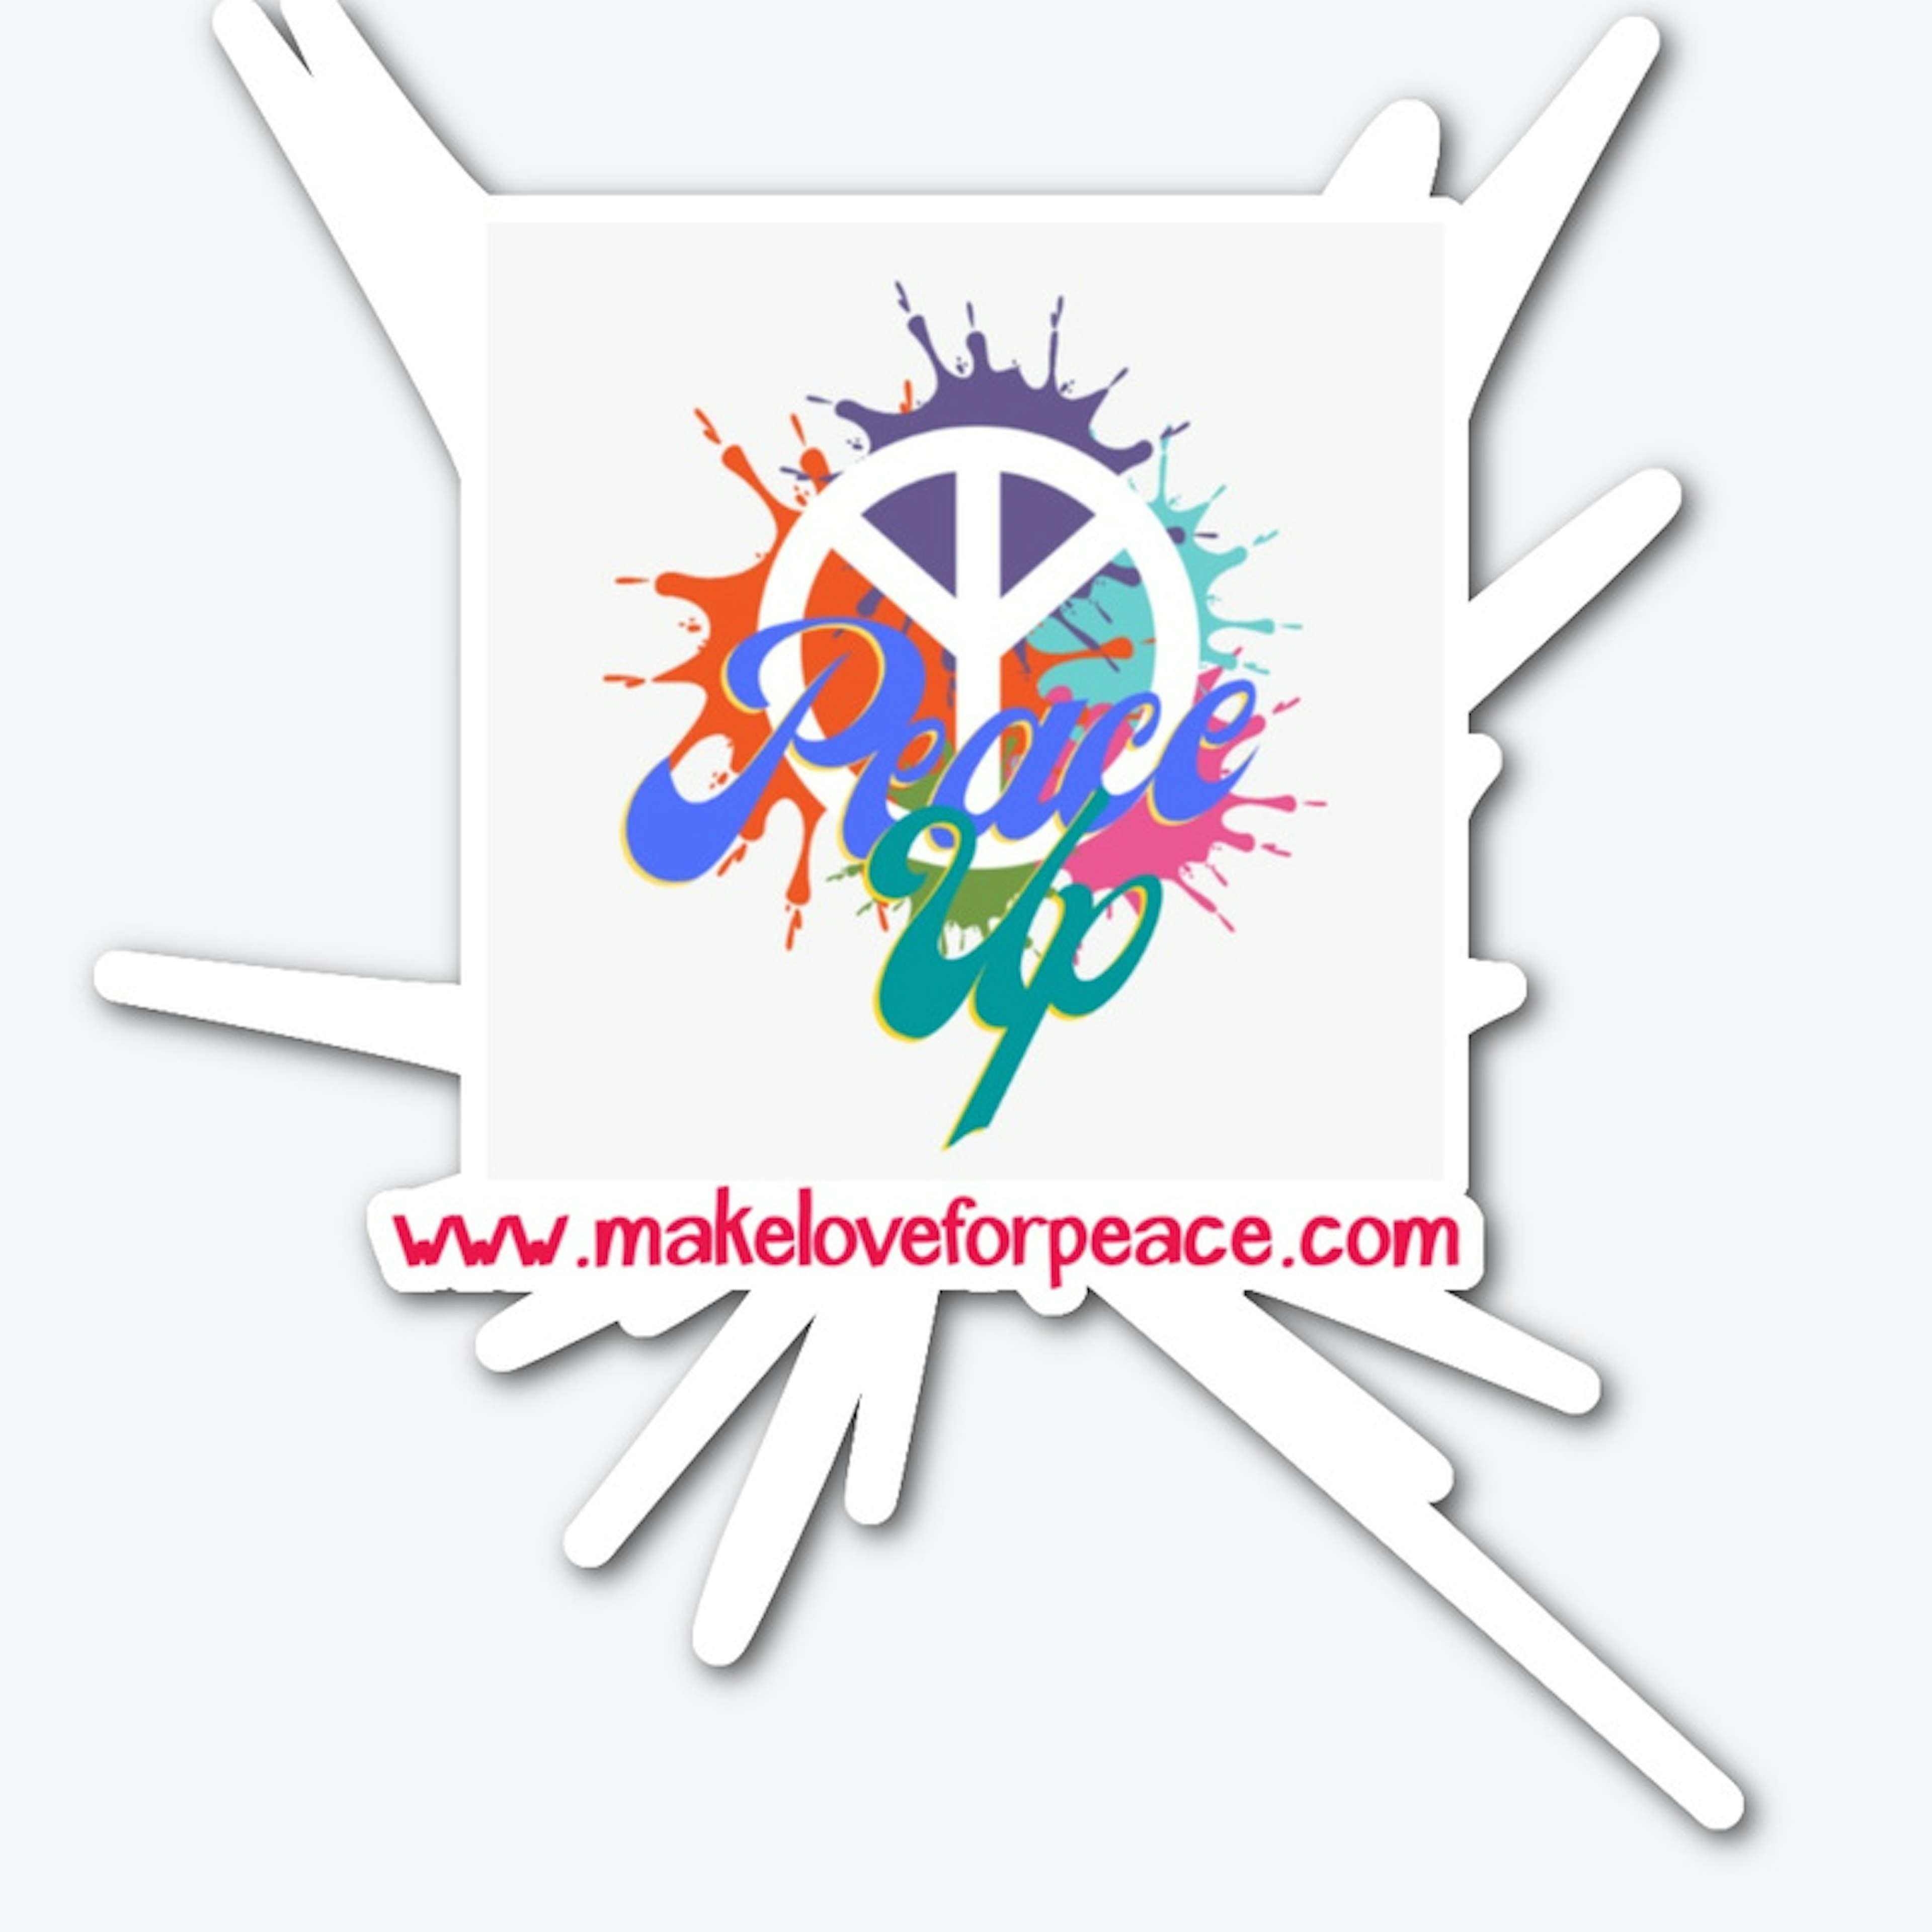 MLFP - Peace up paint splash